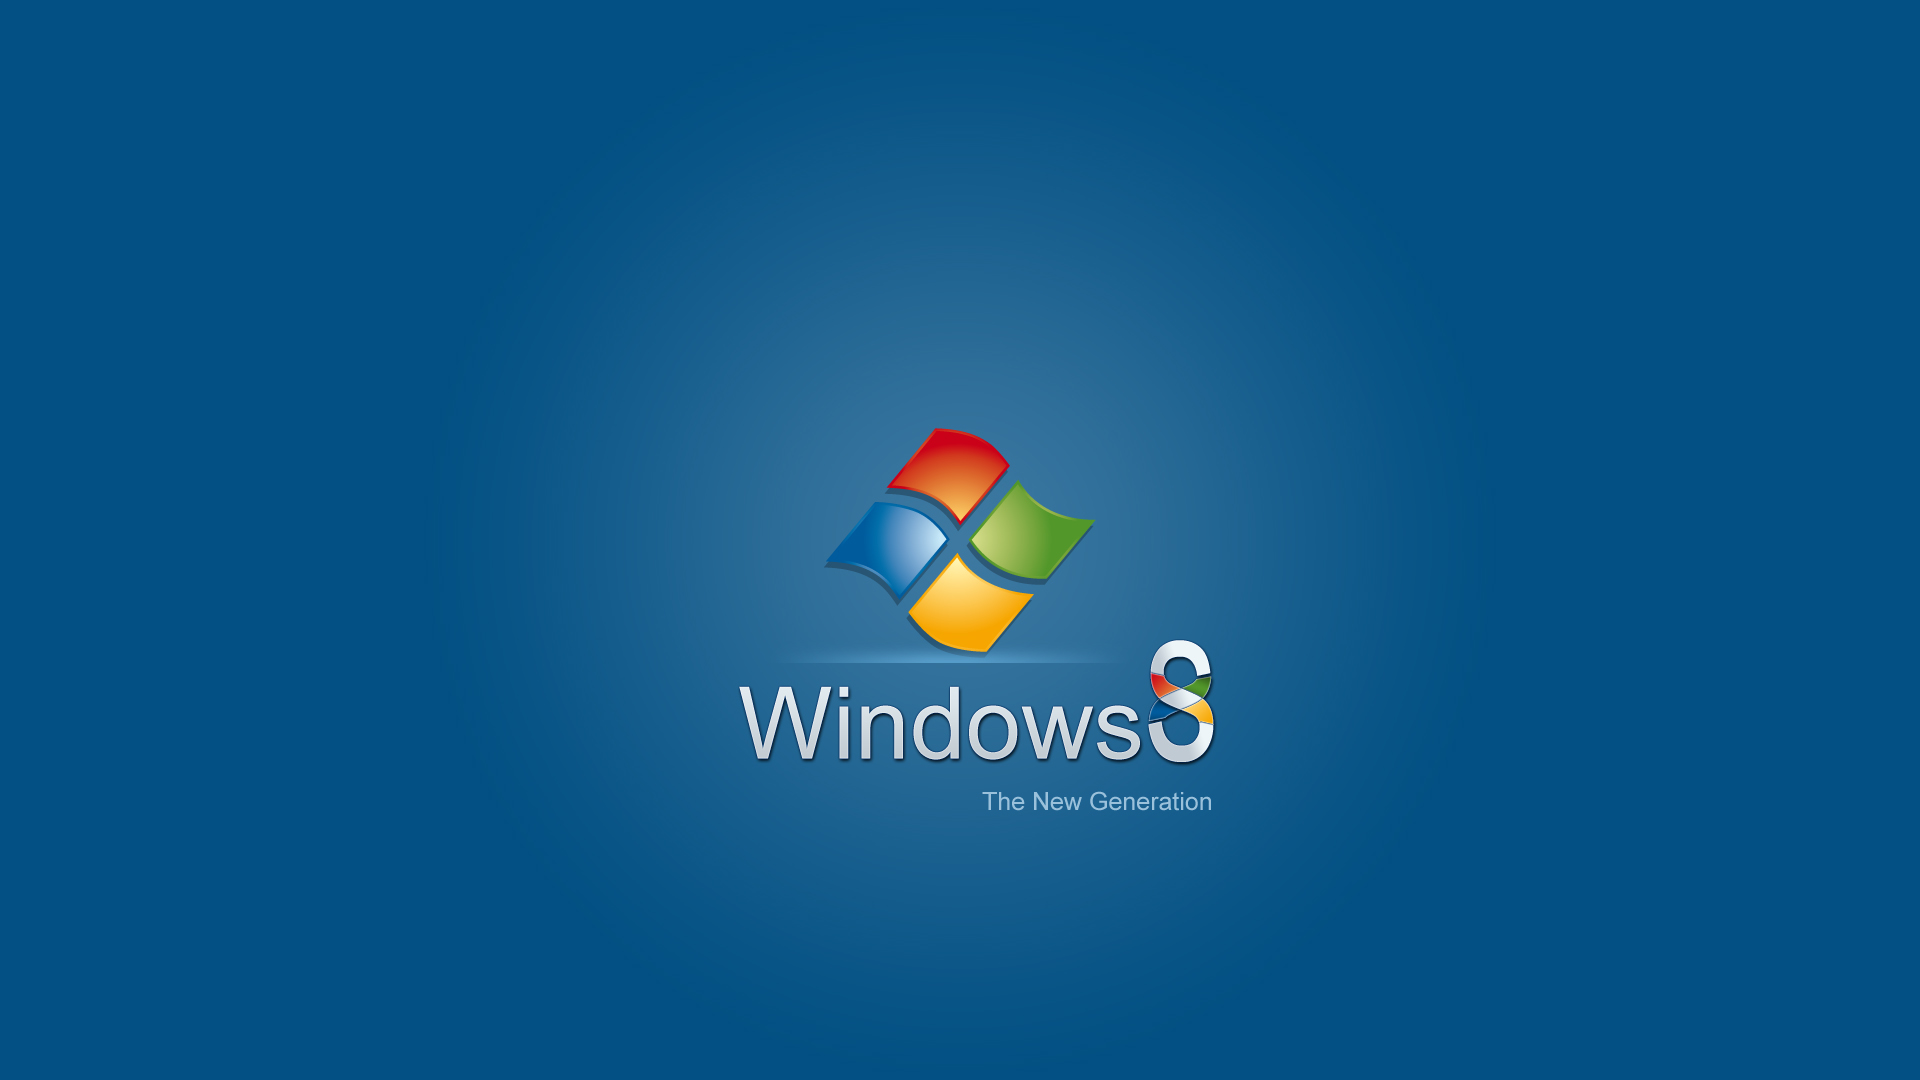 windows 8 wallpaper hd 11 Download Windows 8 Wallpapers HD 1920x1080